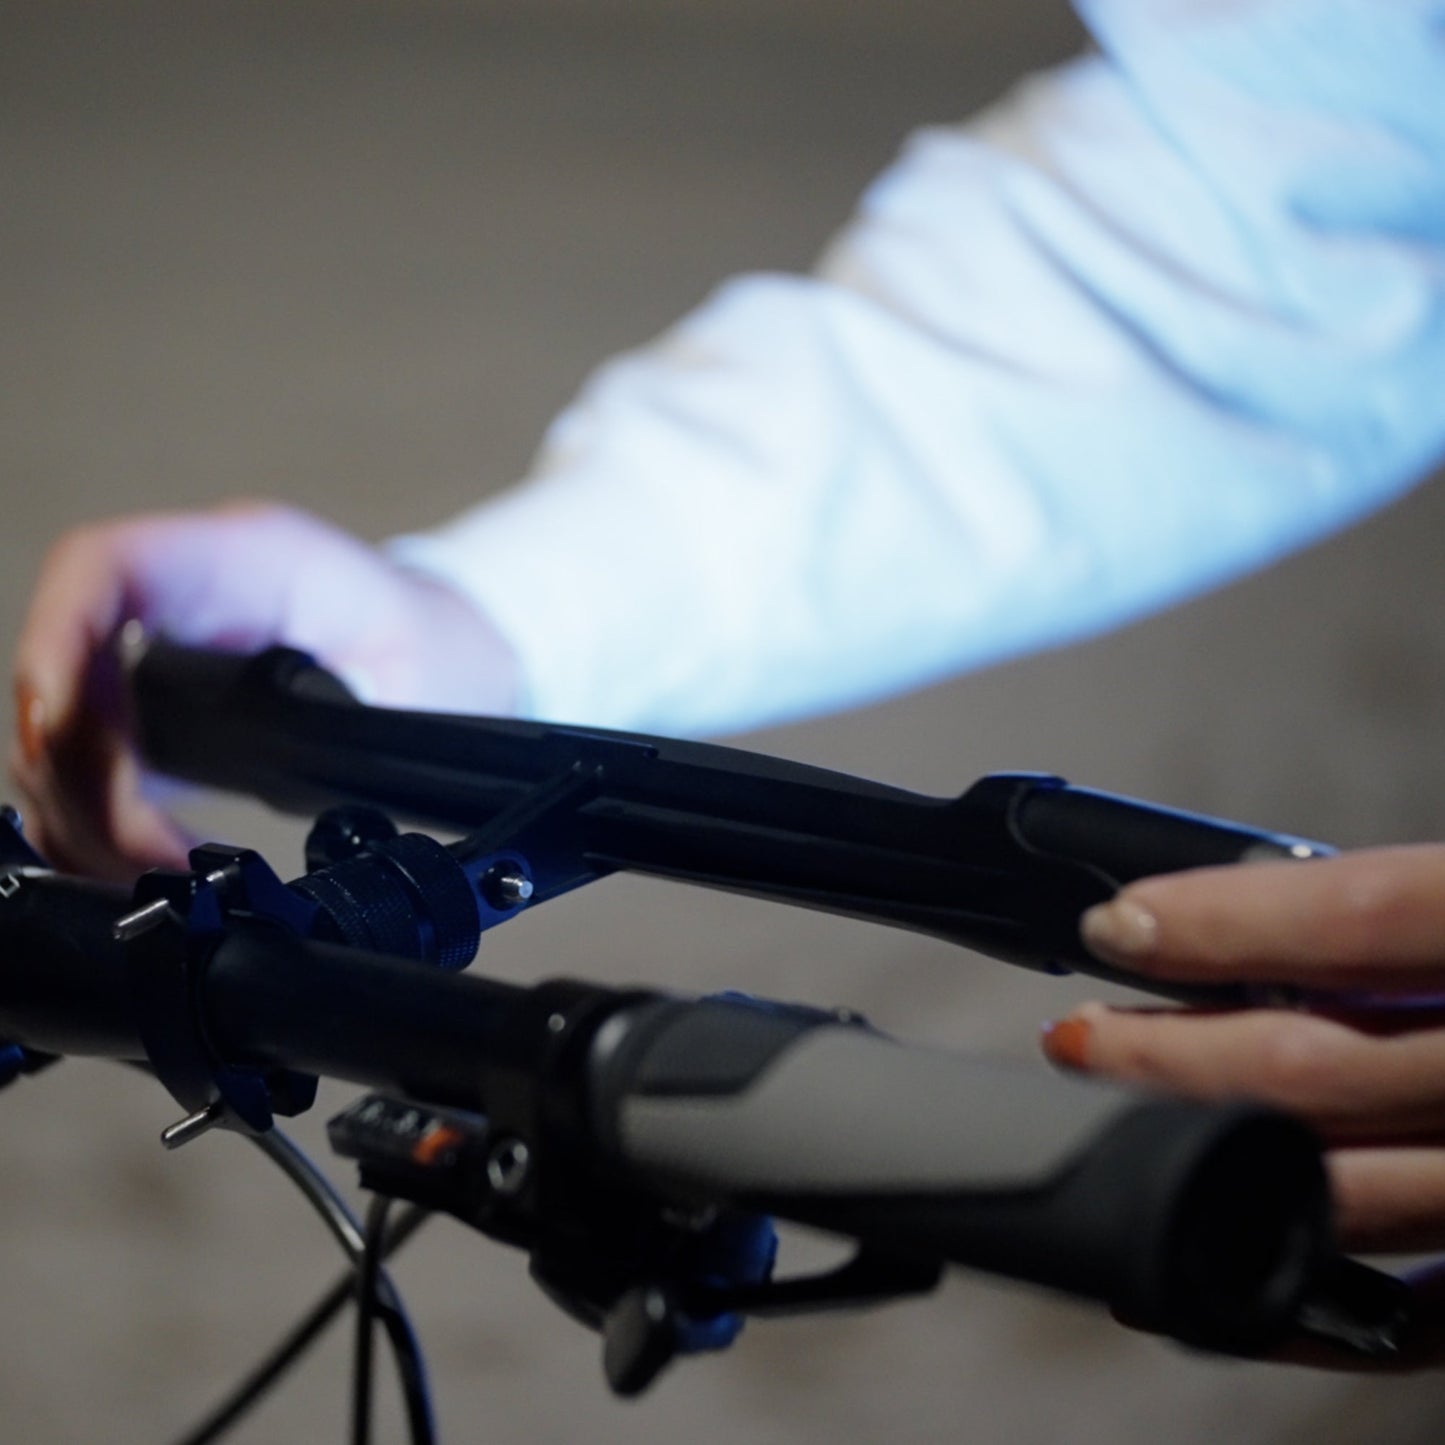 JordiLight Handlebar Attachment Kit: Secure Flashlight Mount for Bikes & Motorcycles - JordiLight Inc.